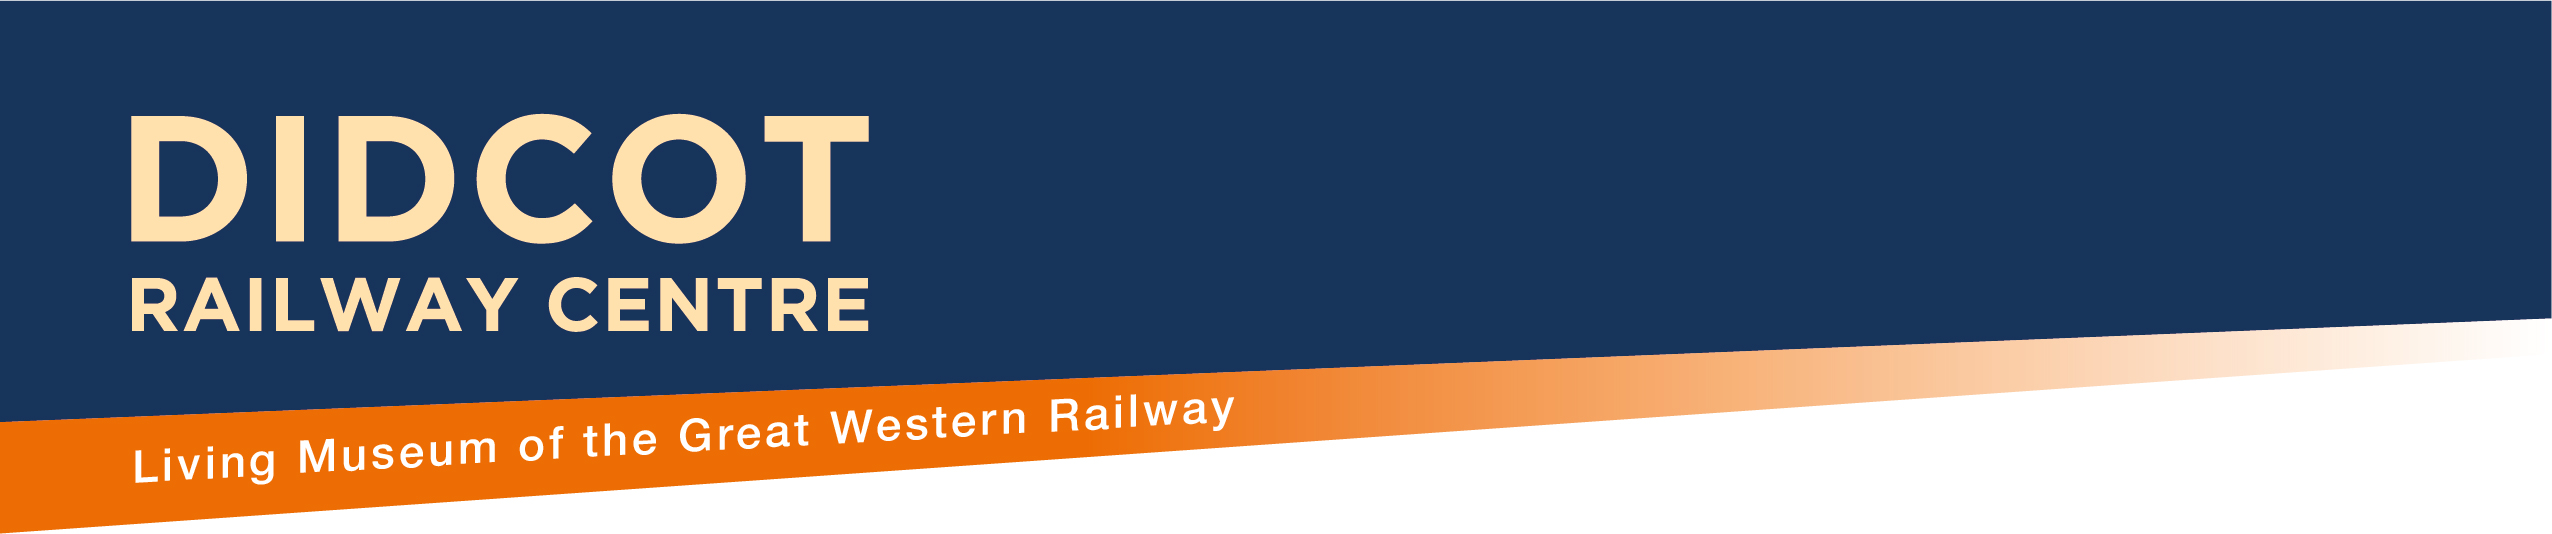 Didcot Railway Centre's logo